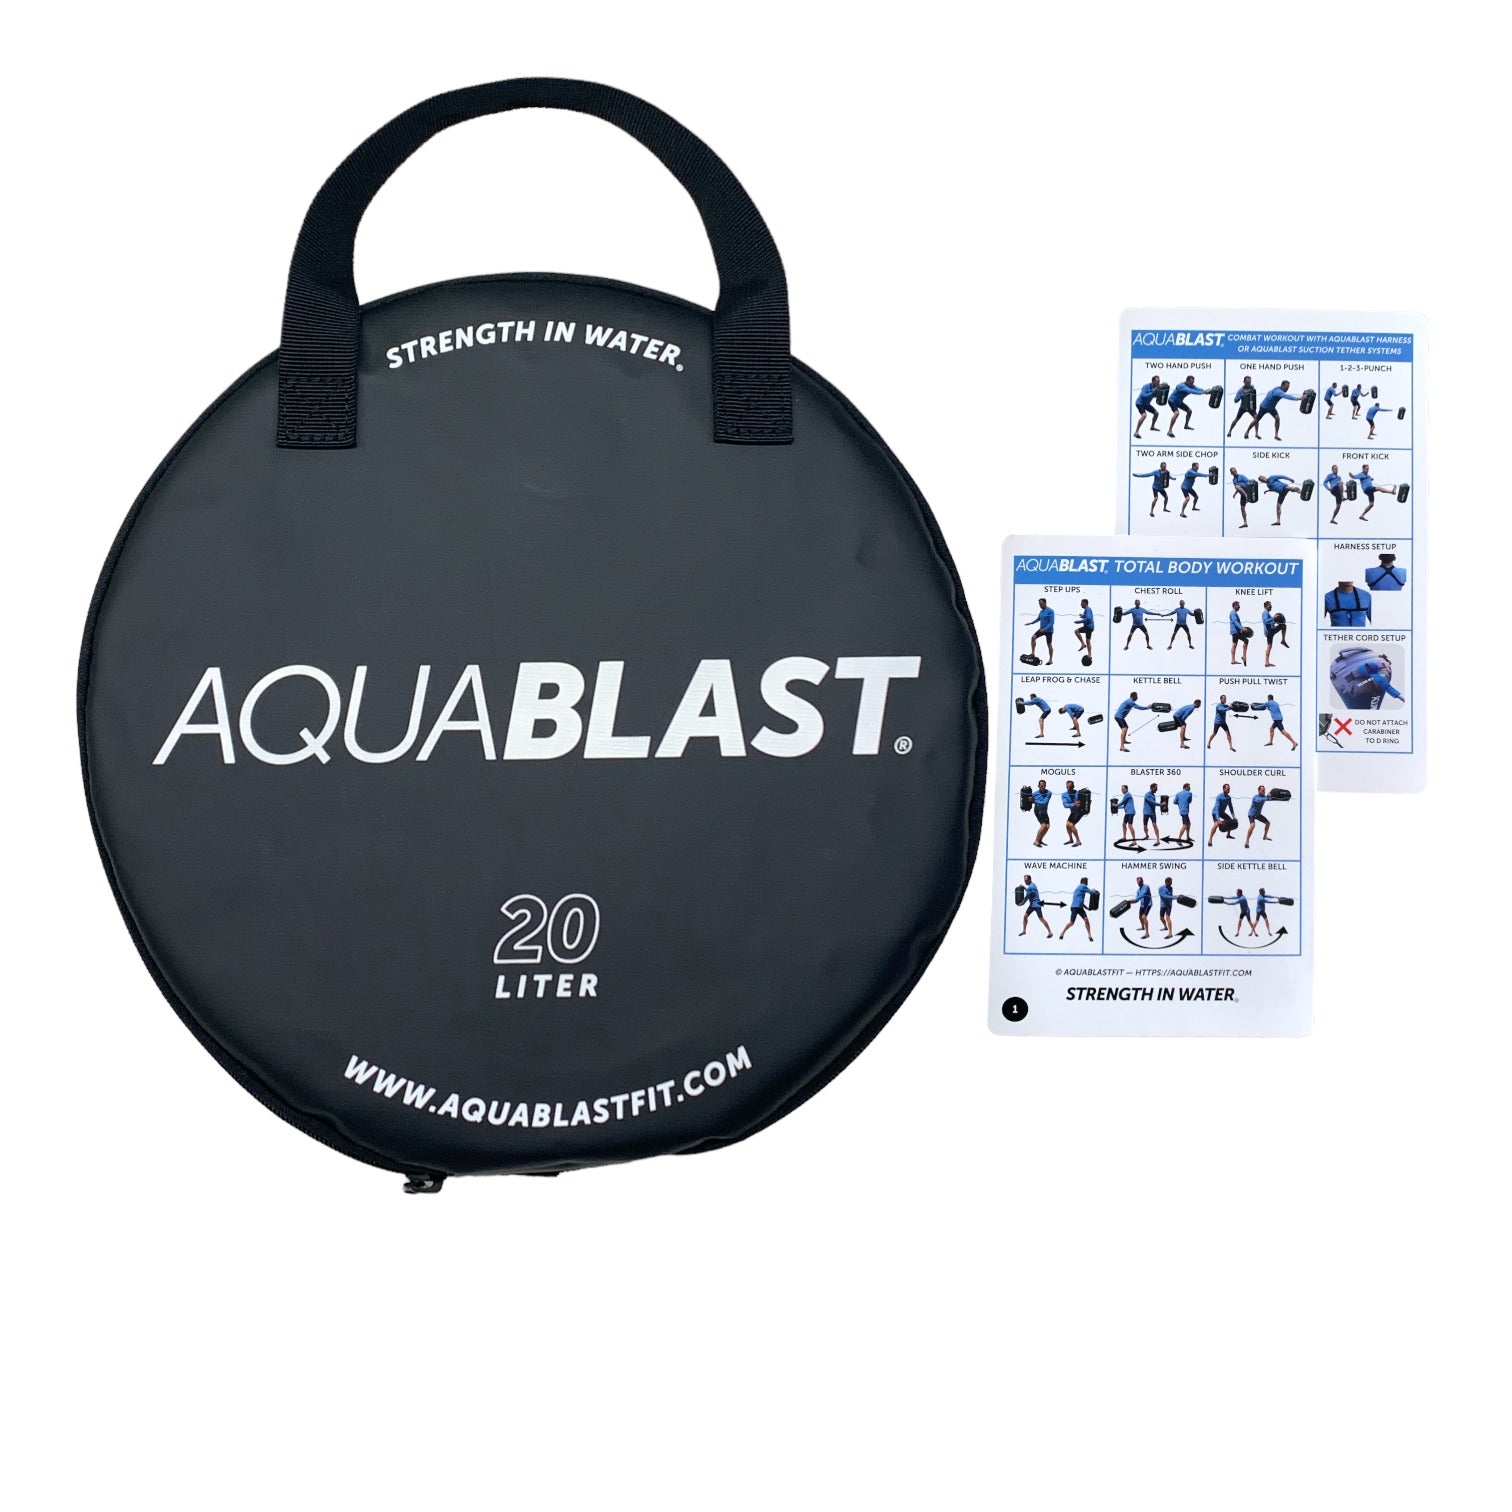 AquaBLAST COMBO - 20 Liter Bag V2 PLUS the Suction Tether System